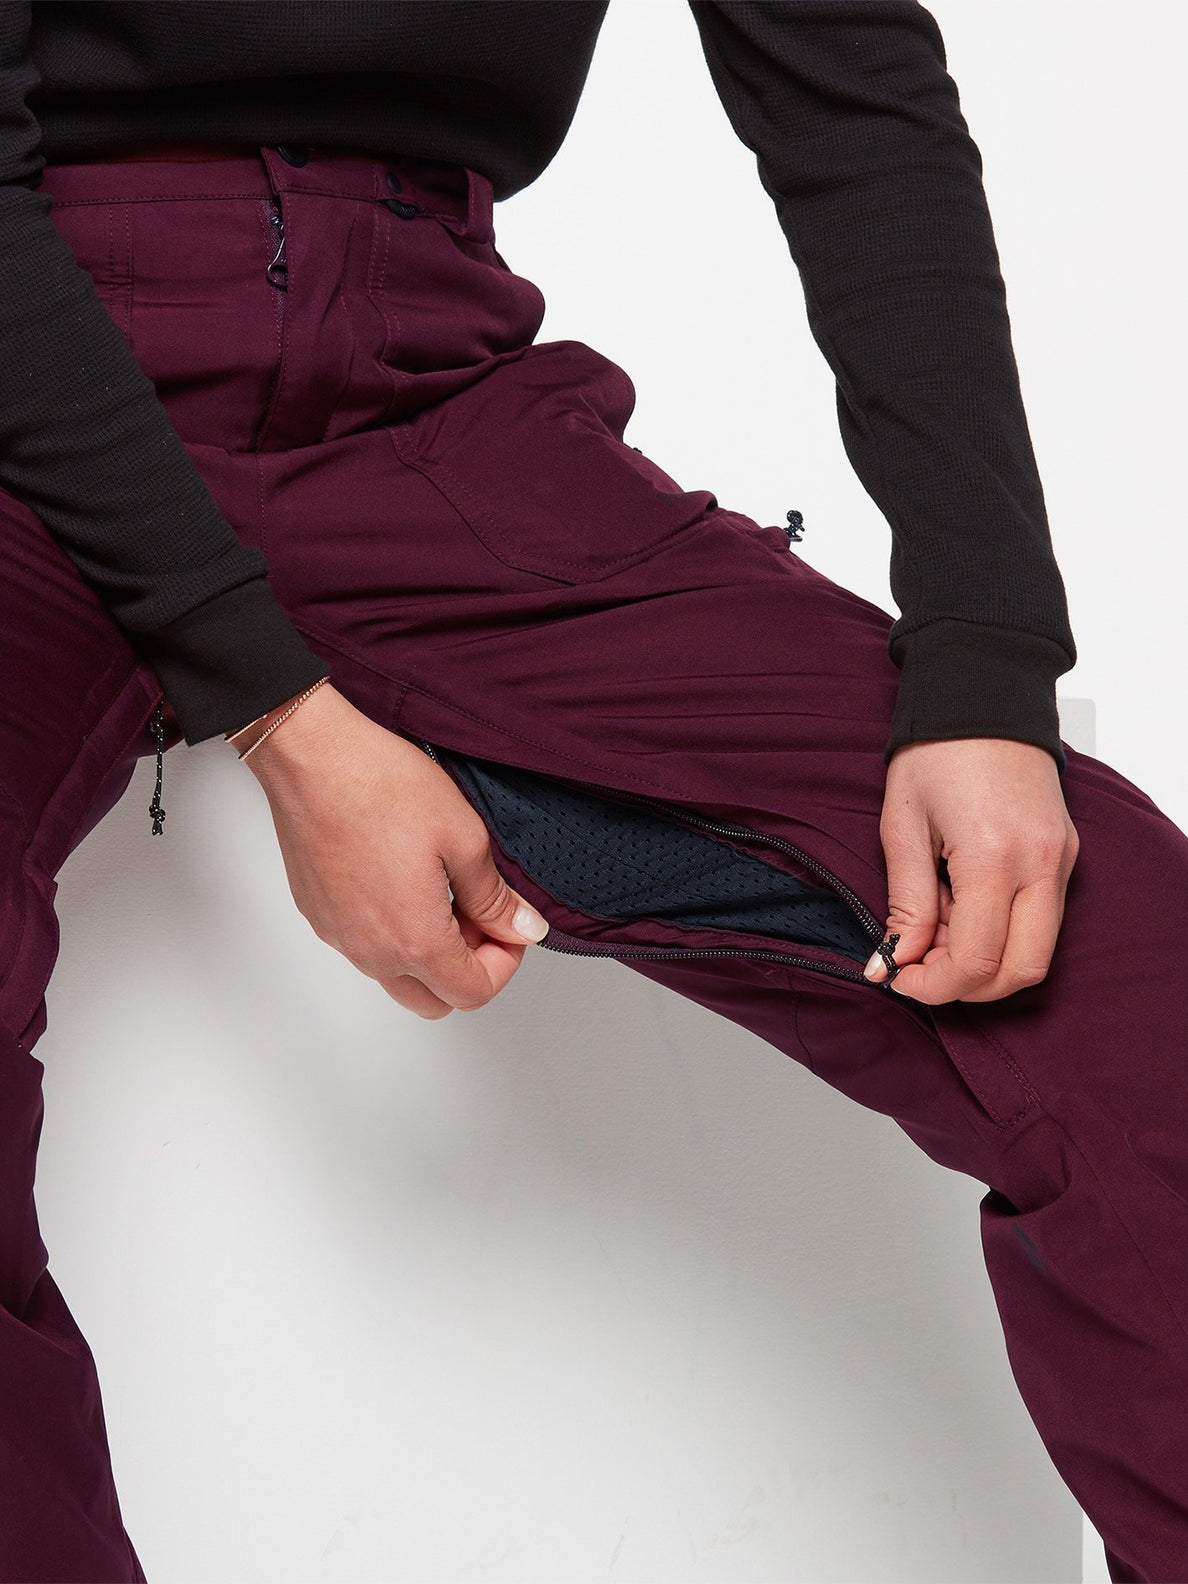 Knox Insulated Gore-Tex Trousers - MERLOT (H1252200_MER) [20]